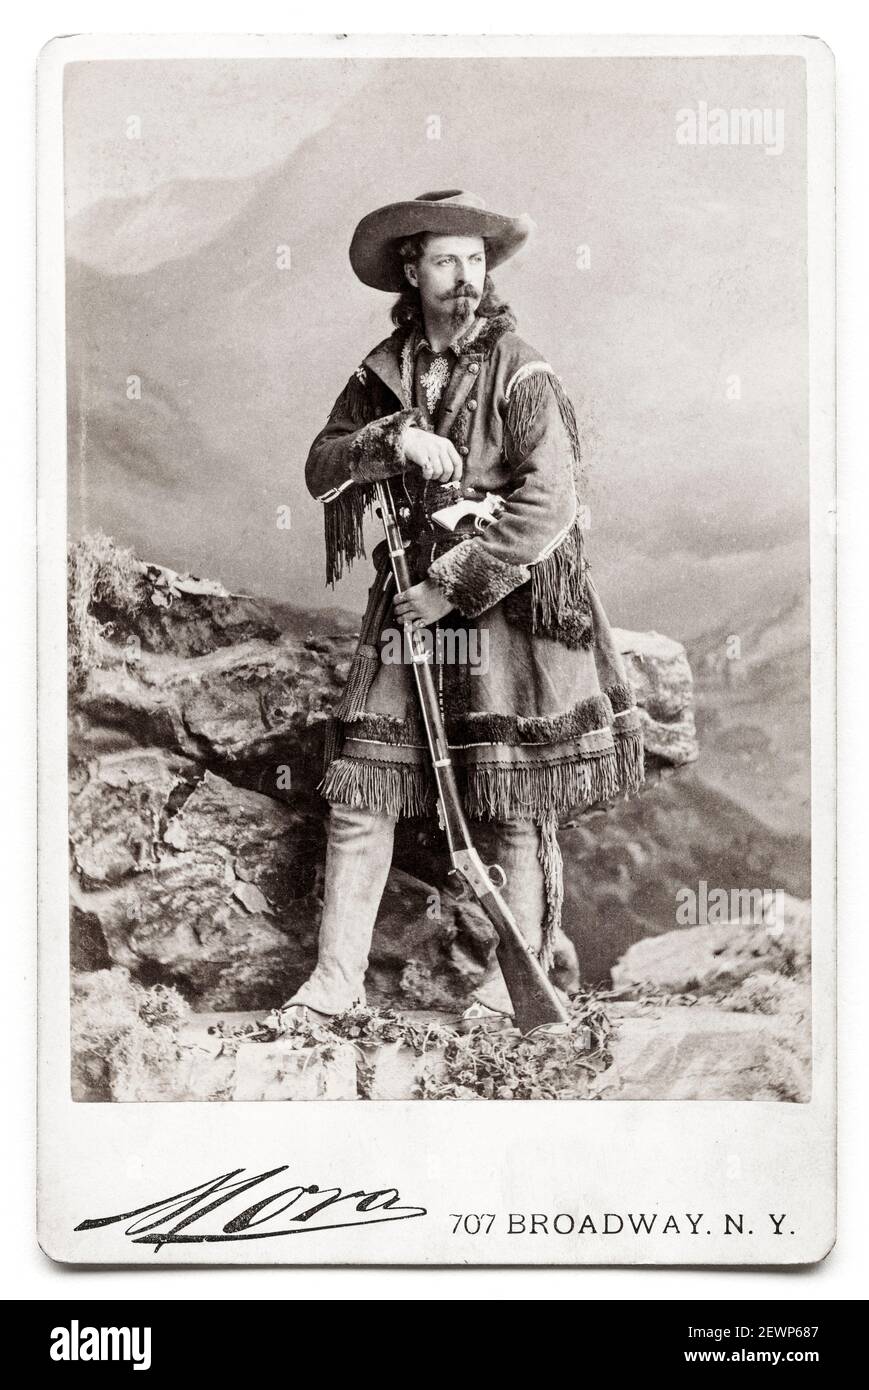 Buffalo Bill Cody, (William Frederick Cody, 1846-1917), American soldier, bison hunter and showman, portrait photograph by Jose Maria Mora, circa 1875 Stock Photo